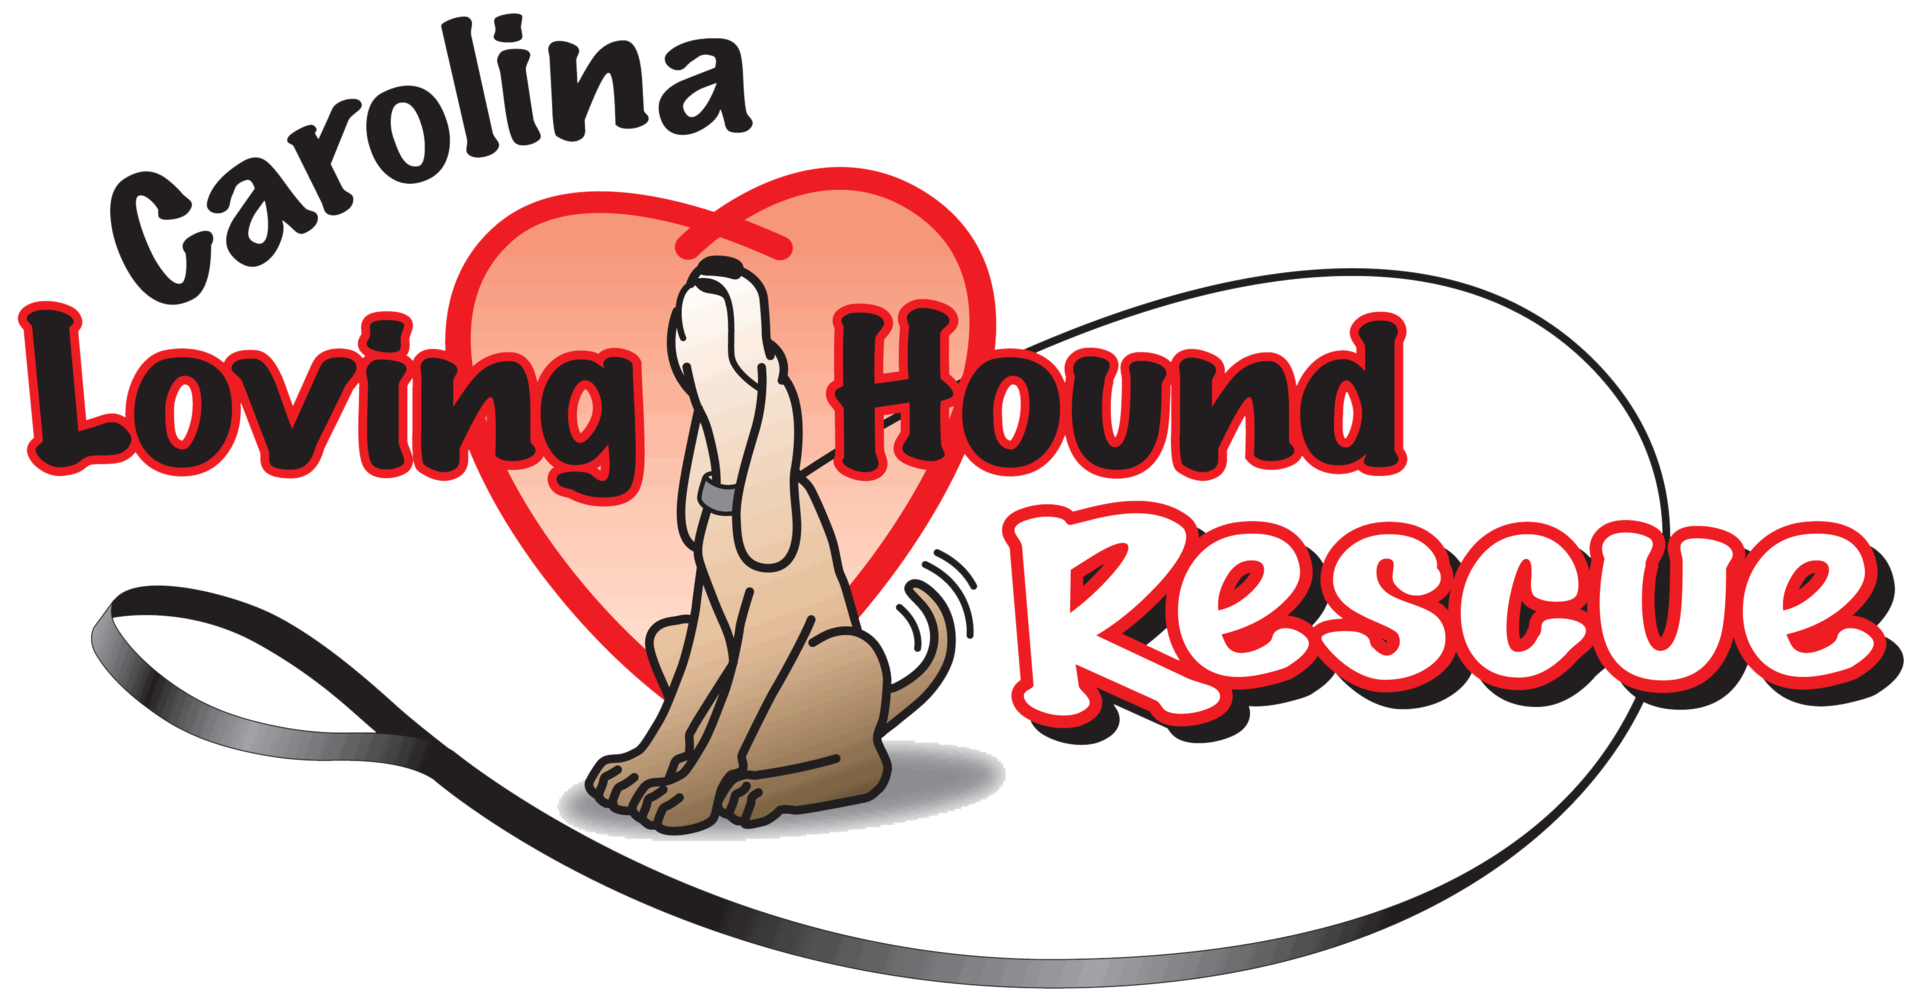 Carolina Loving Hound Rescue